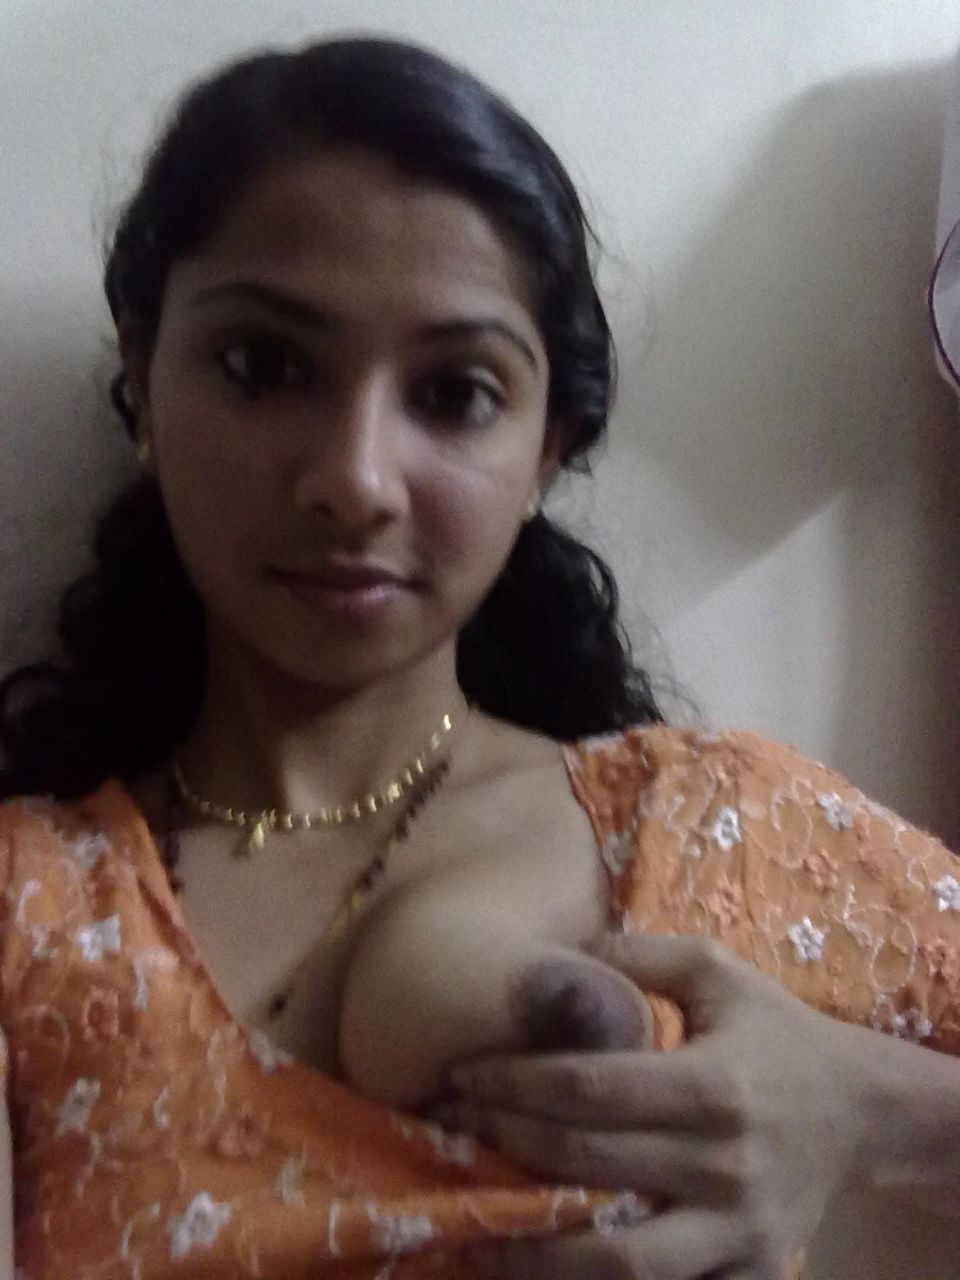 best of Nude selfie hd photos nurse indian